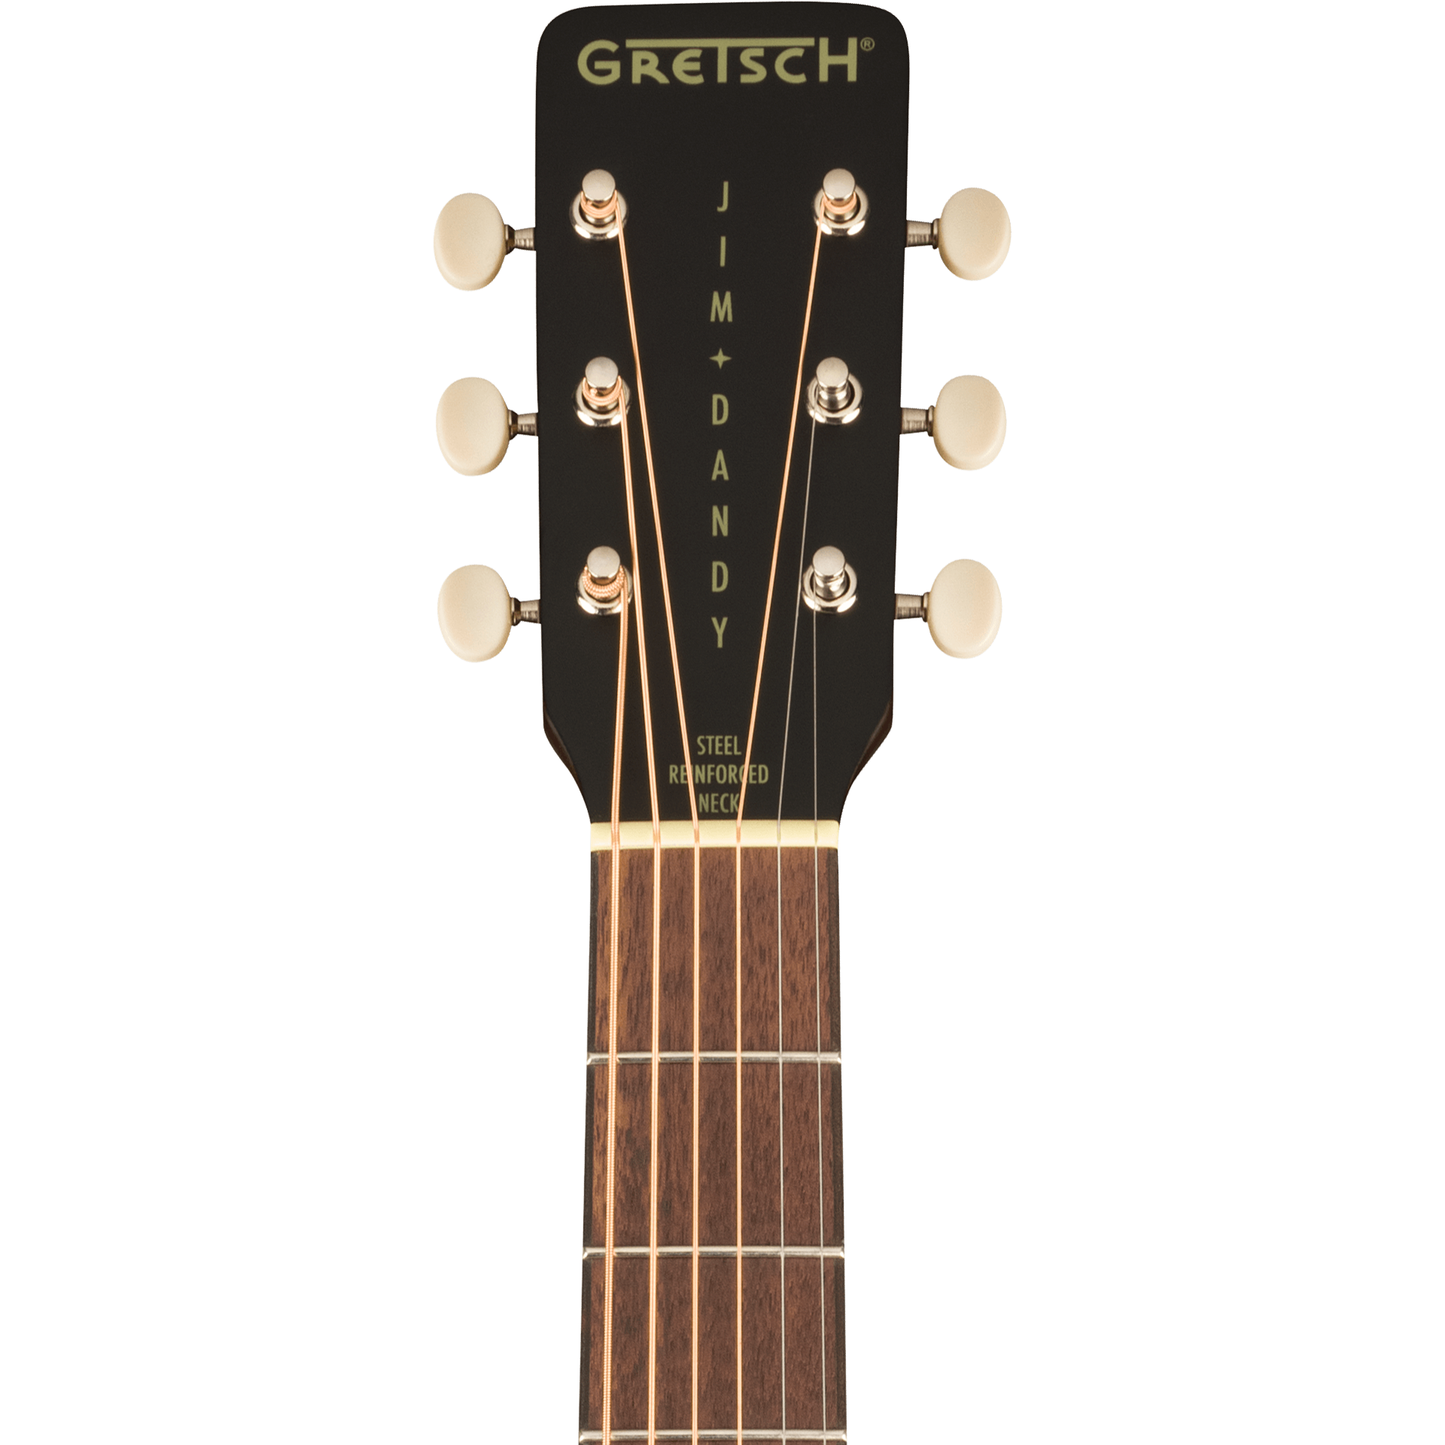 Gretsch Deltoluxe Concert Acoustic Electric Guitar - Black Top